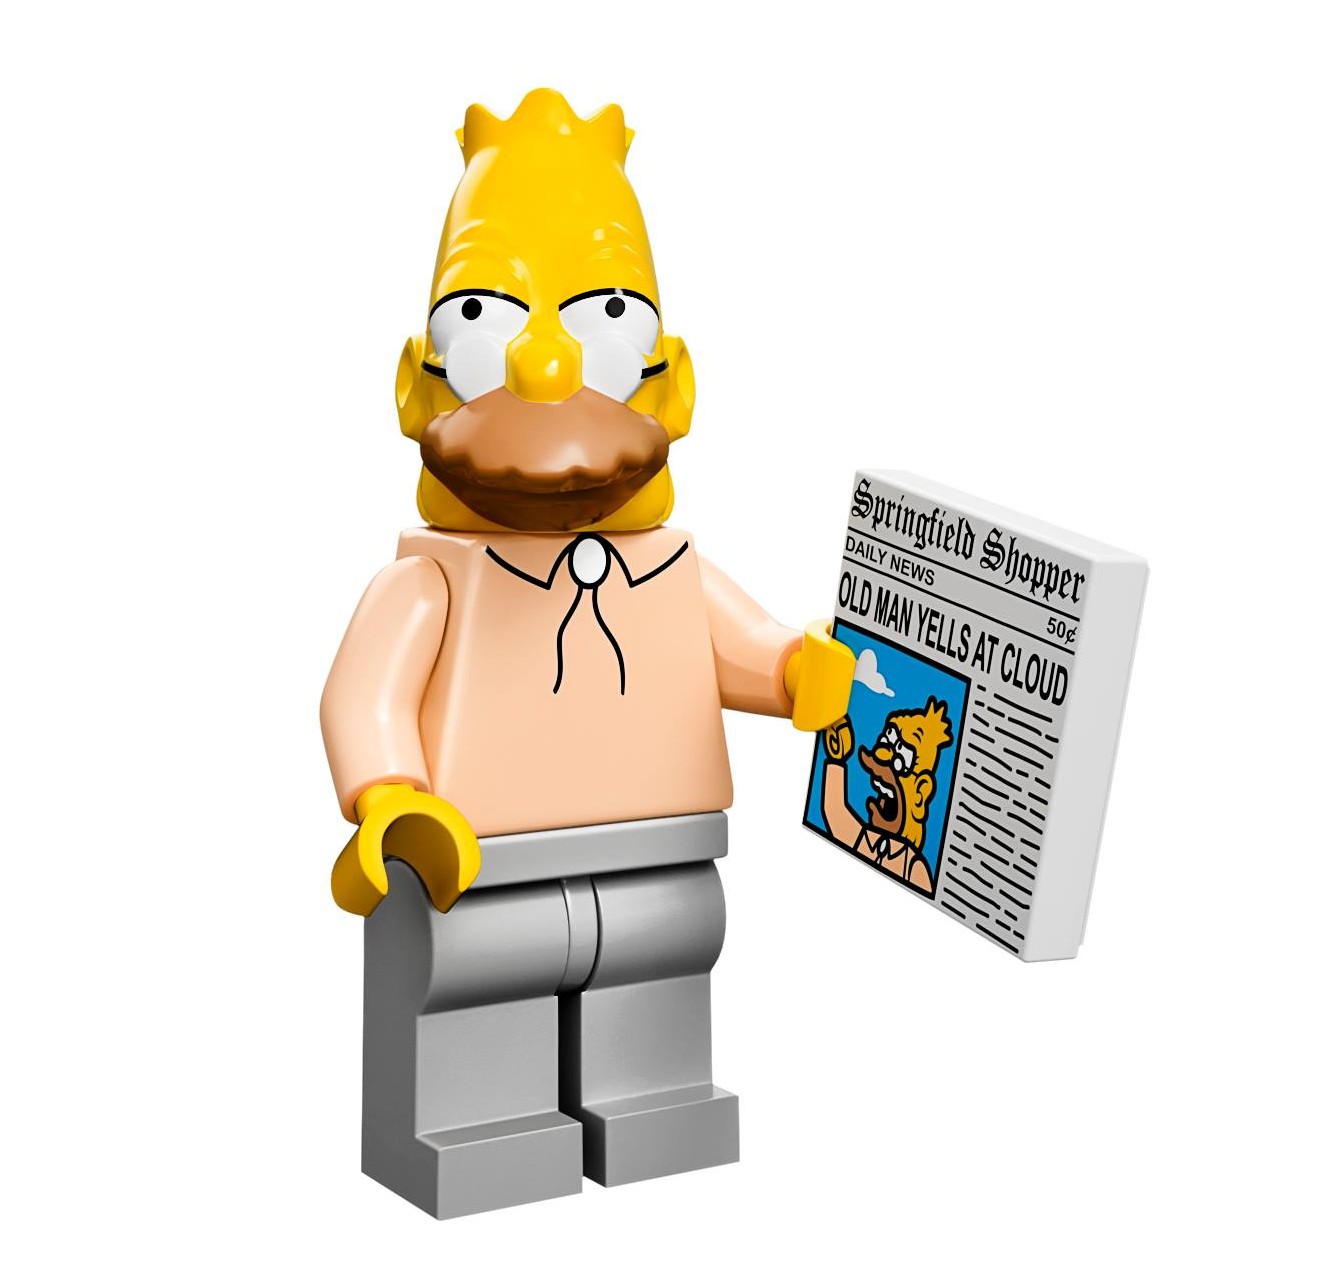 LEGO-Simpsons-Grampa-Simpson-Minifigure-with-Newspaper-e1395843579651.jpg